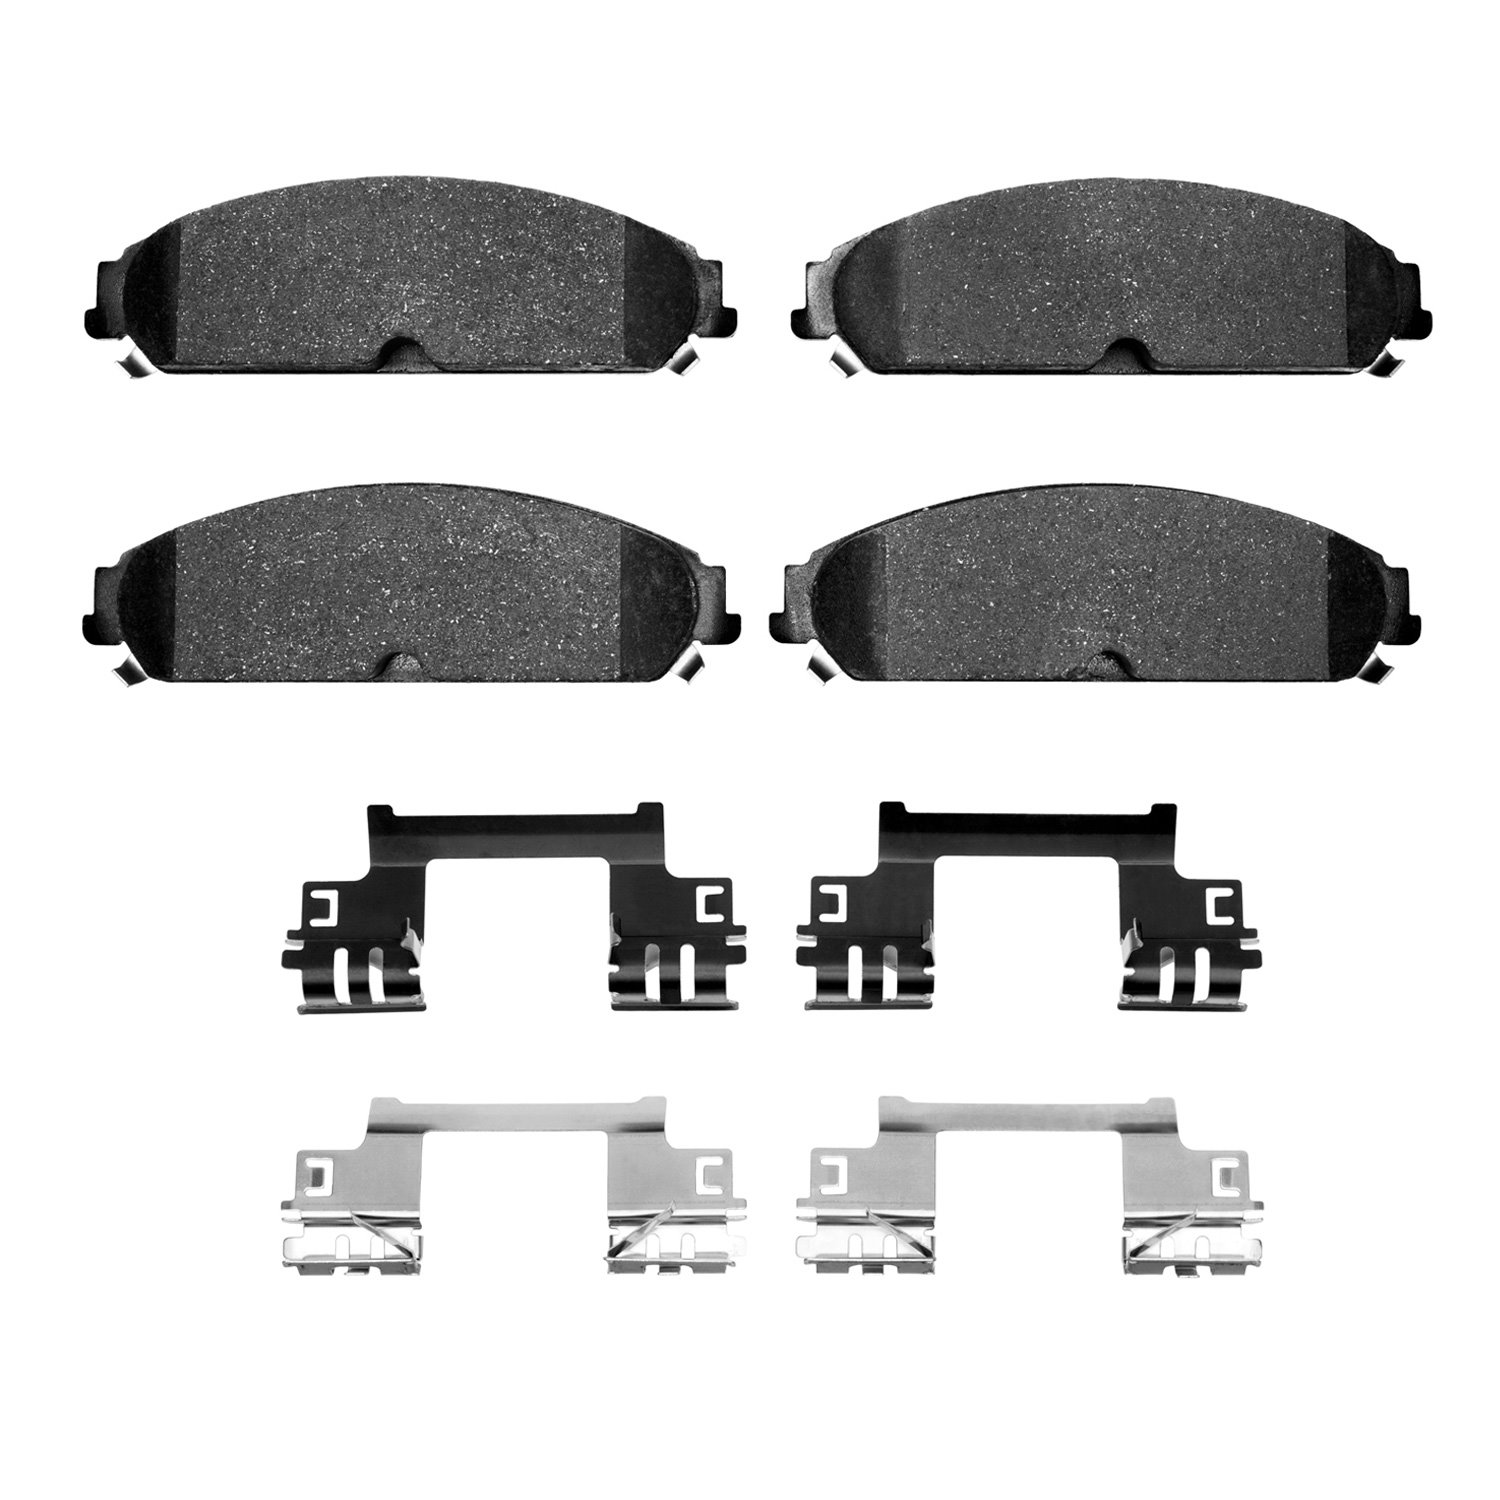 1551-1058-02 5000 Advanced Ceramic Brake Pads & Hardware Kit, Fits Select Mopar, Position: Front